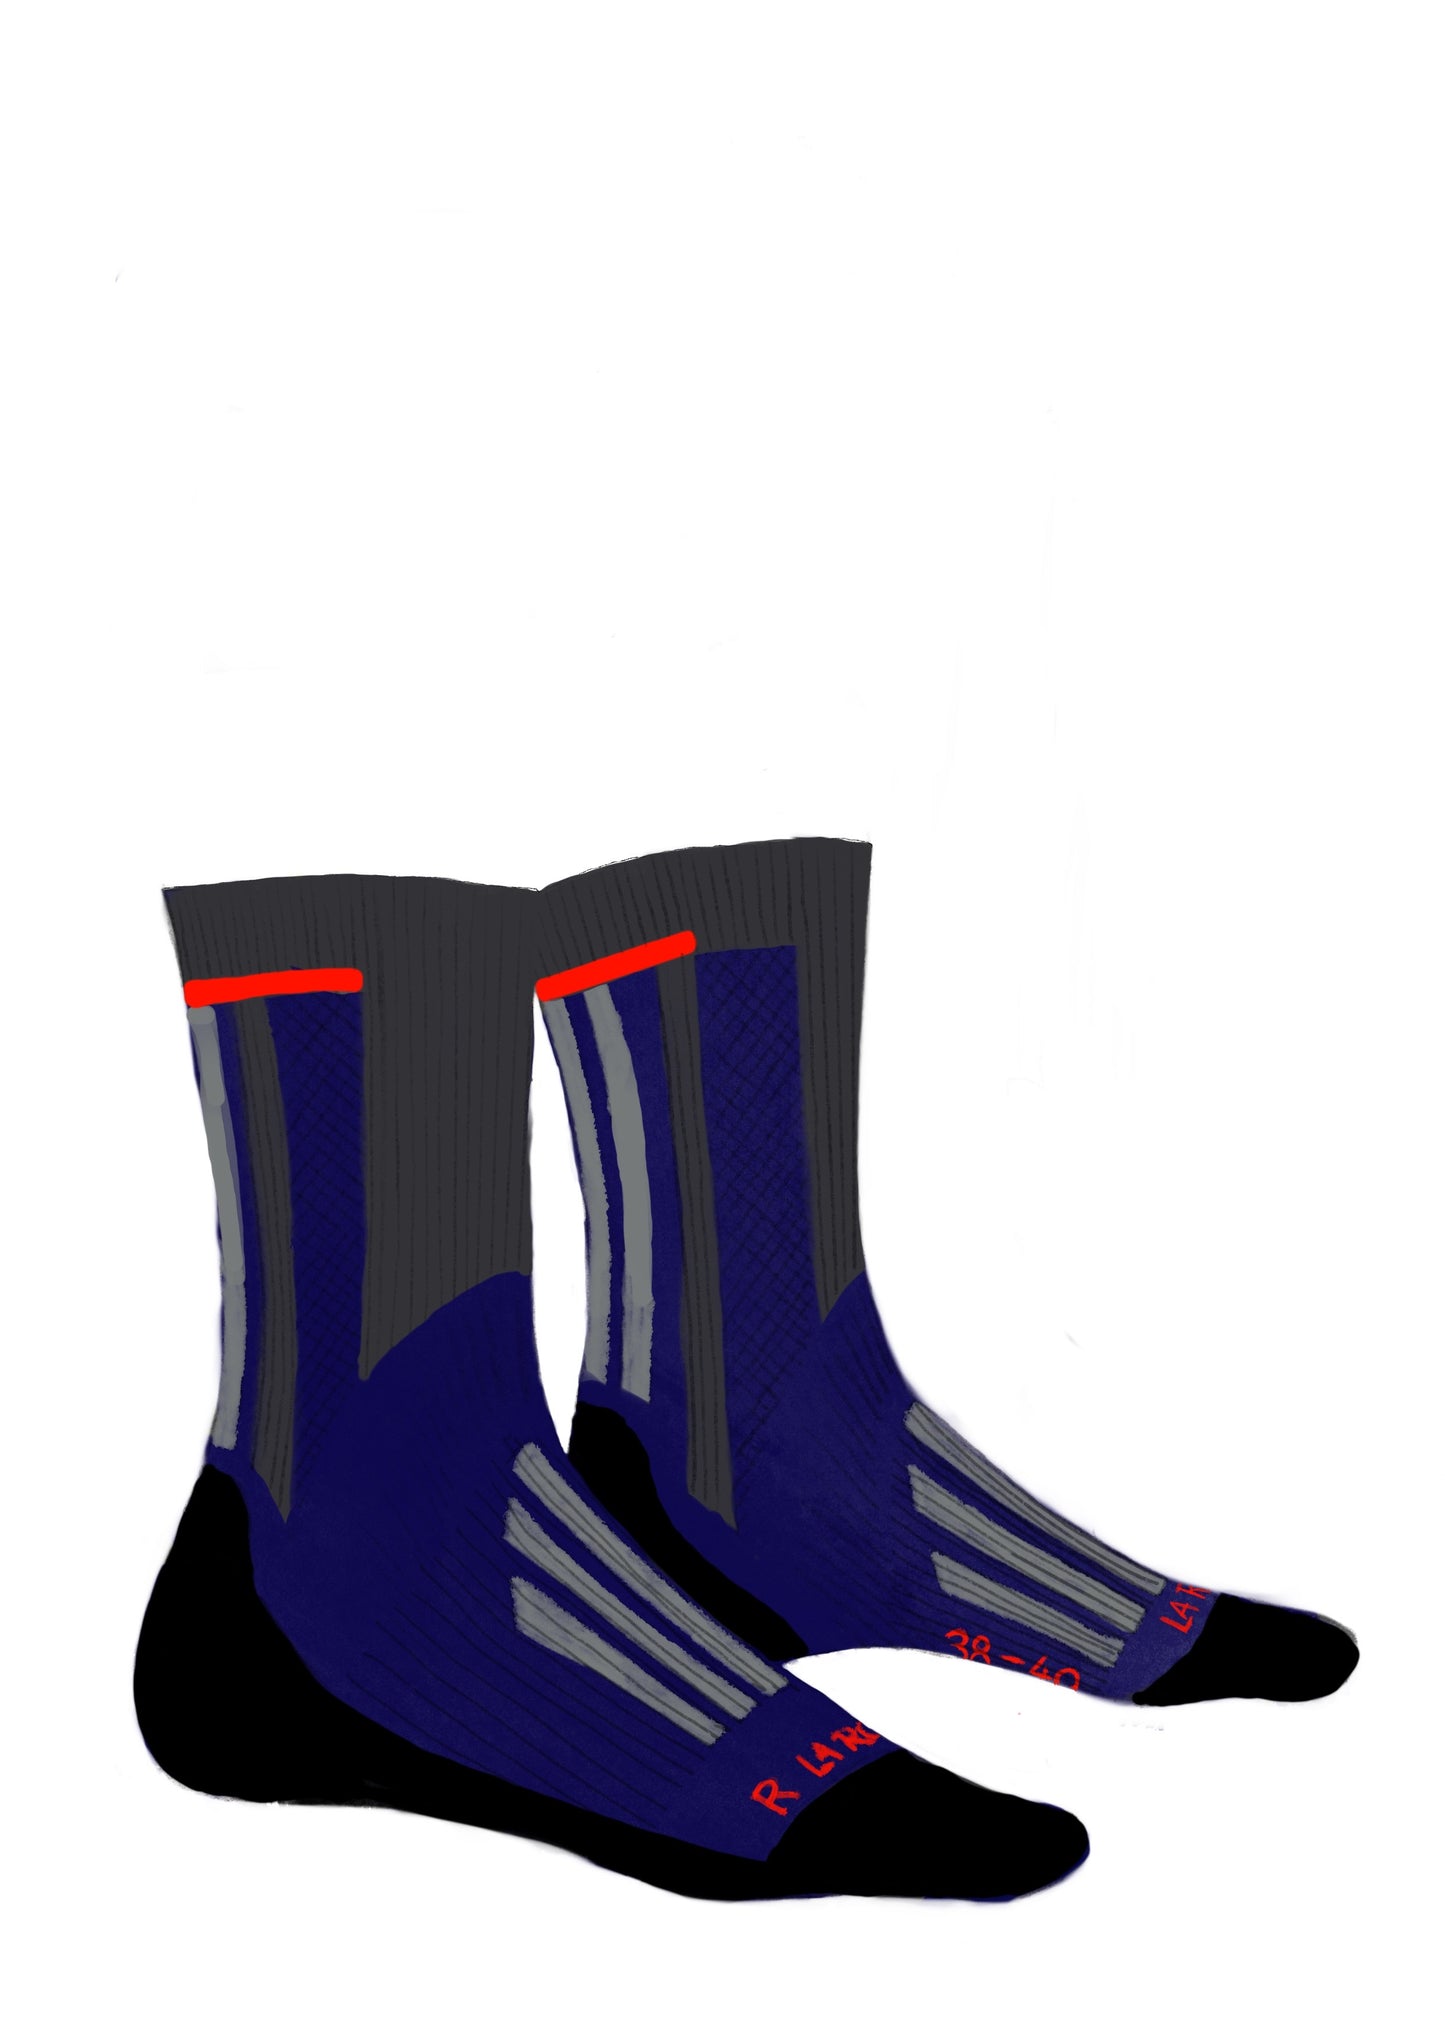 Merino d'Arles socks